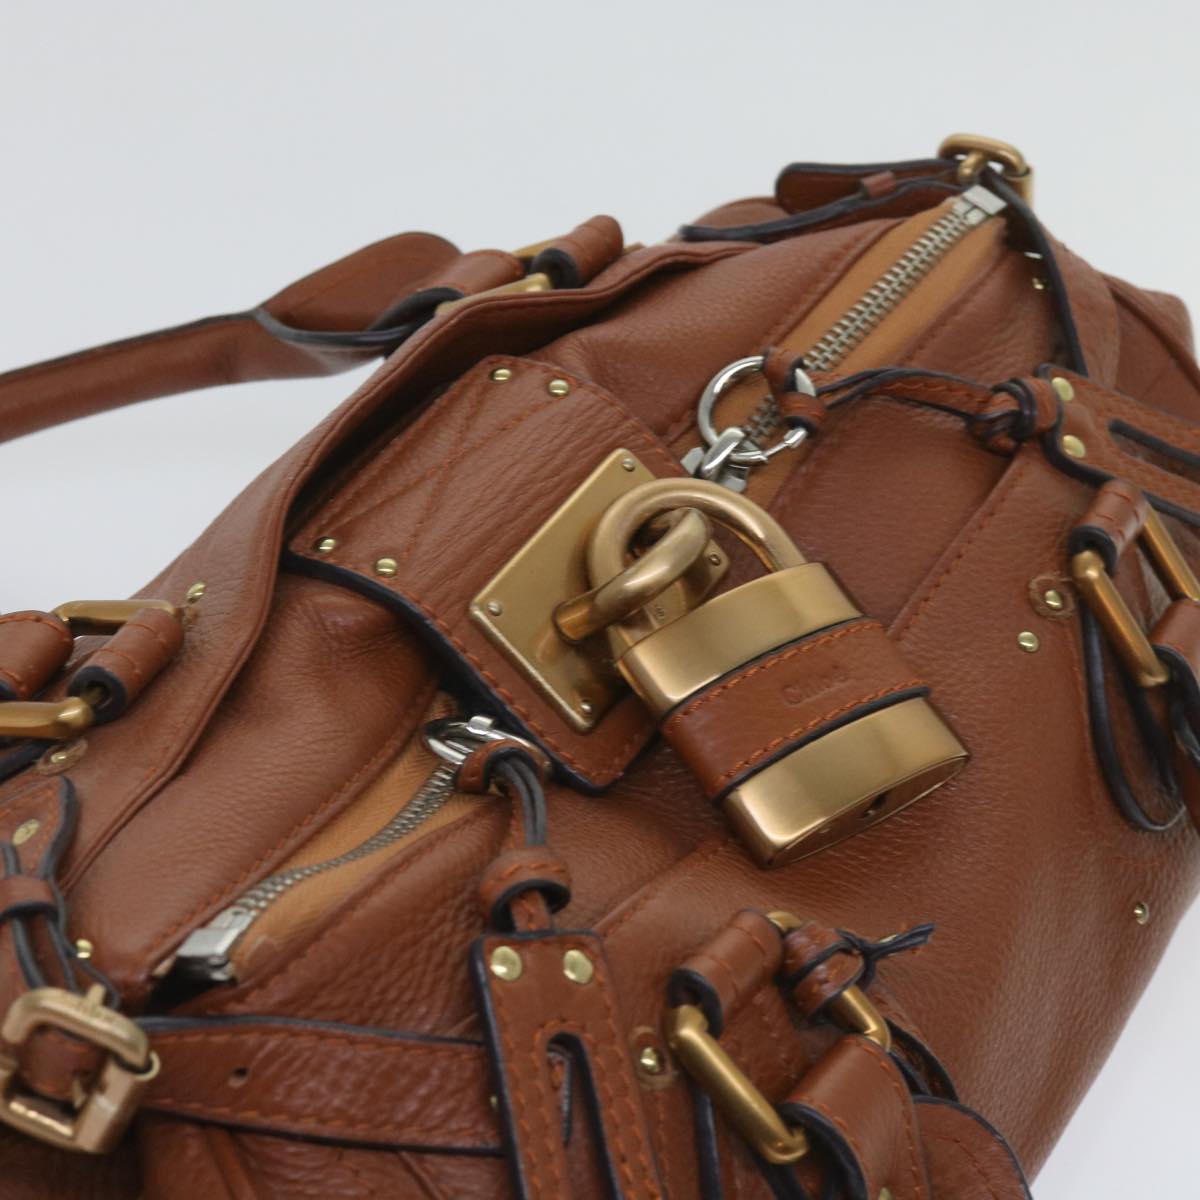 Chloe Paddington Hand Bag Leather Brown Auth 63548